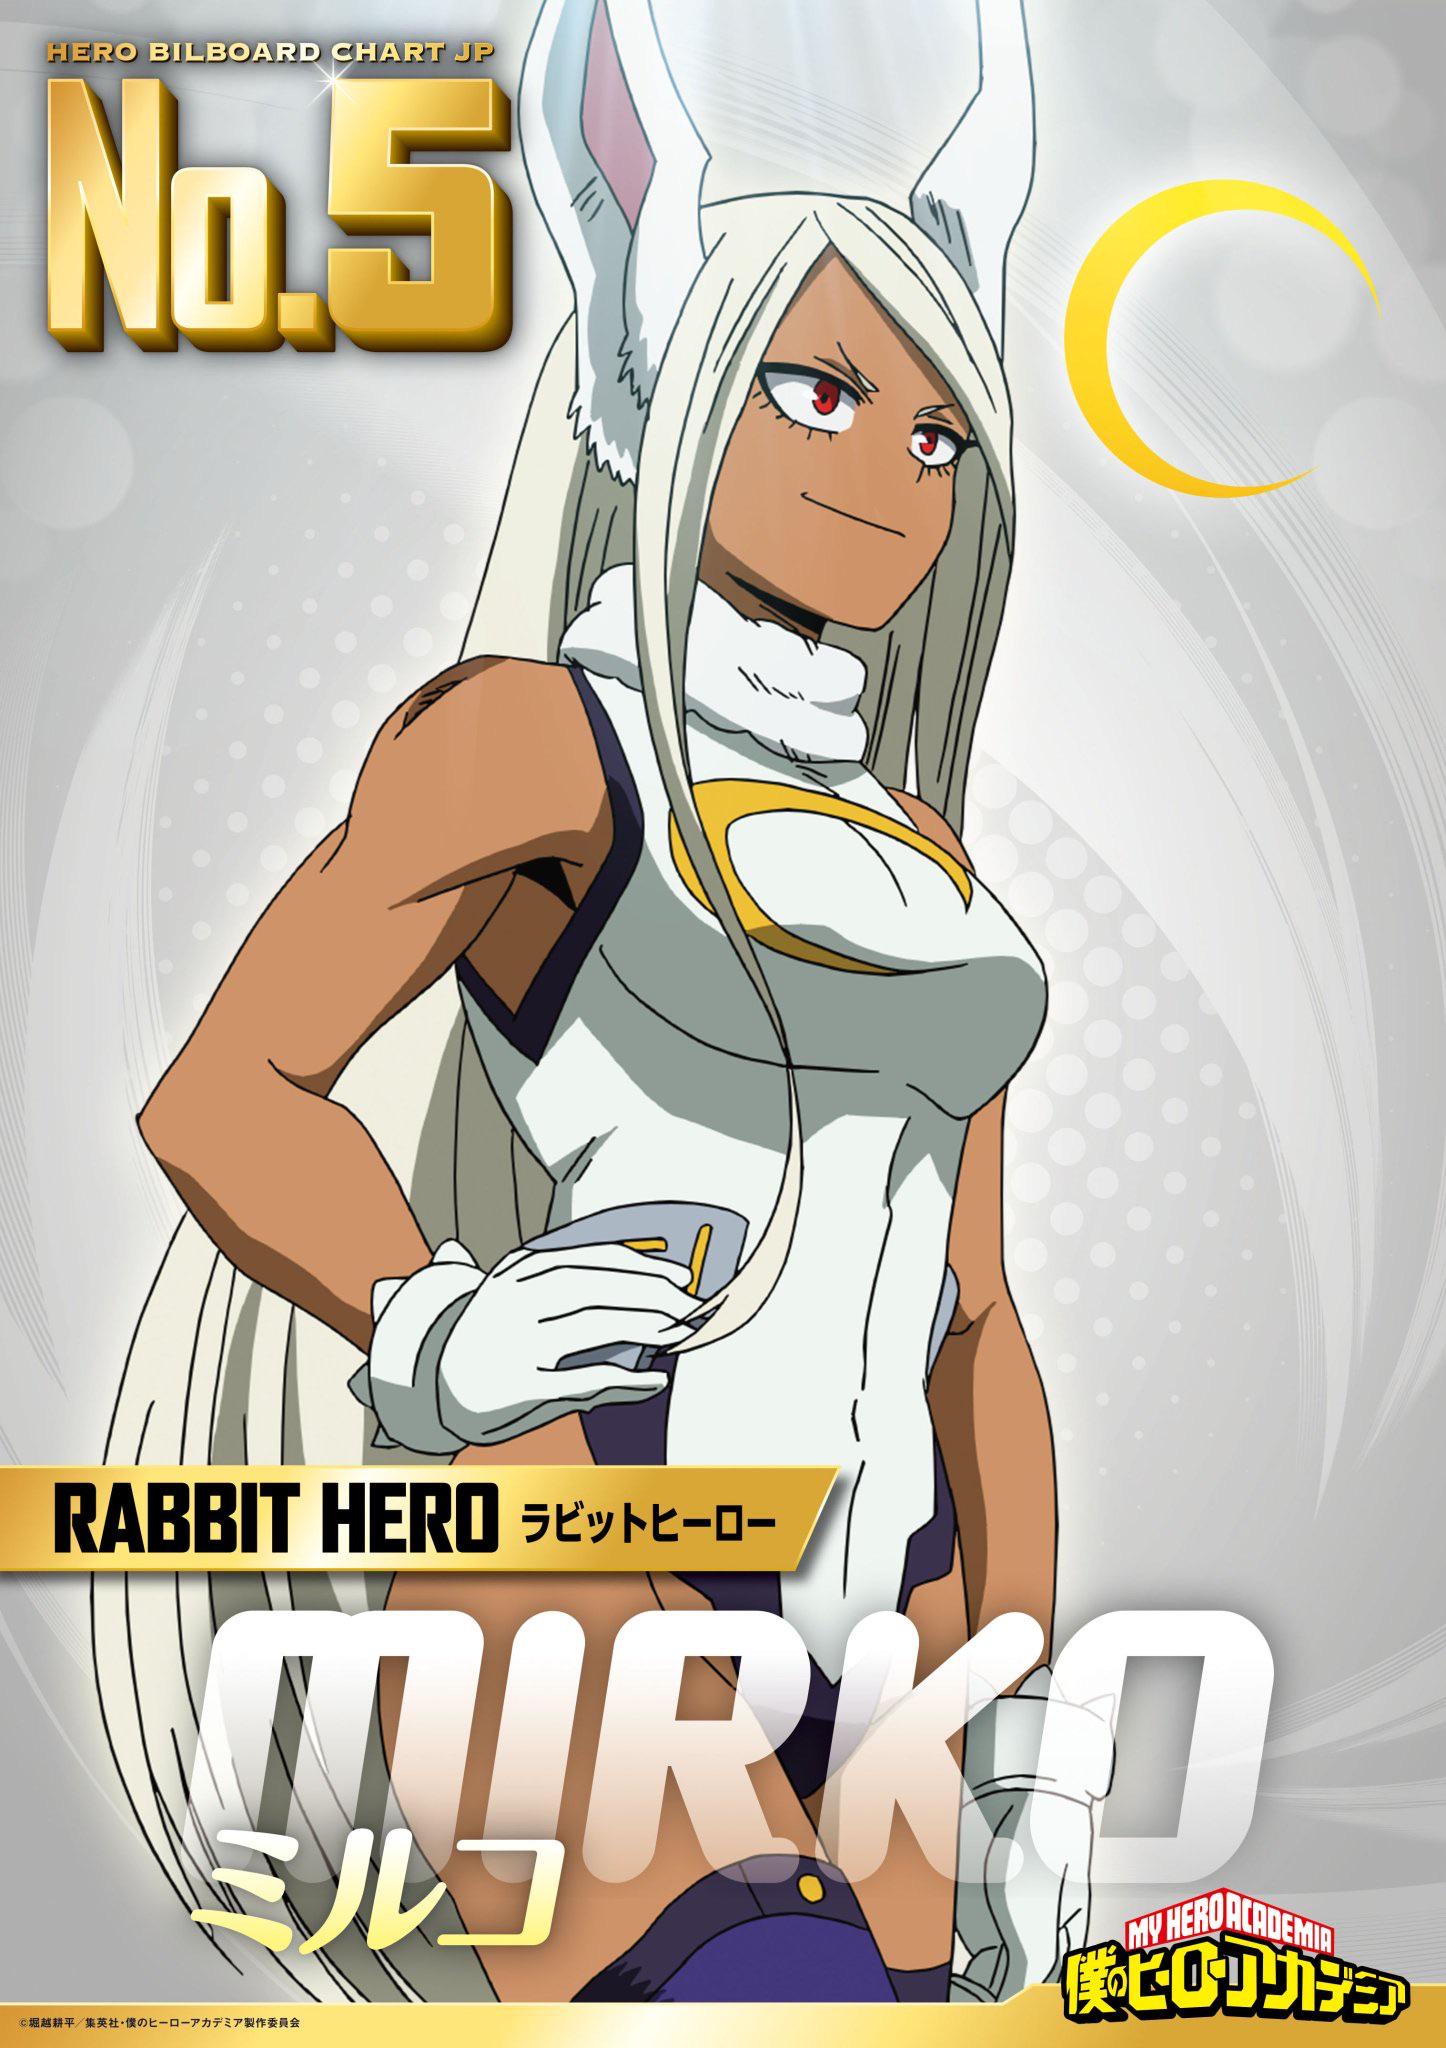 Hero Billboard for “Rabbit Hero” Mirko!!!